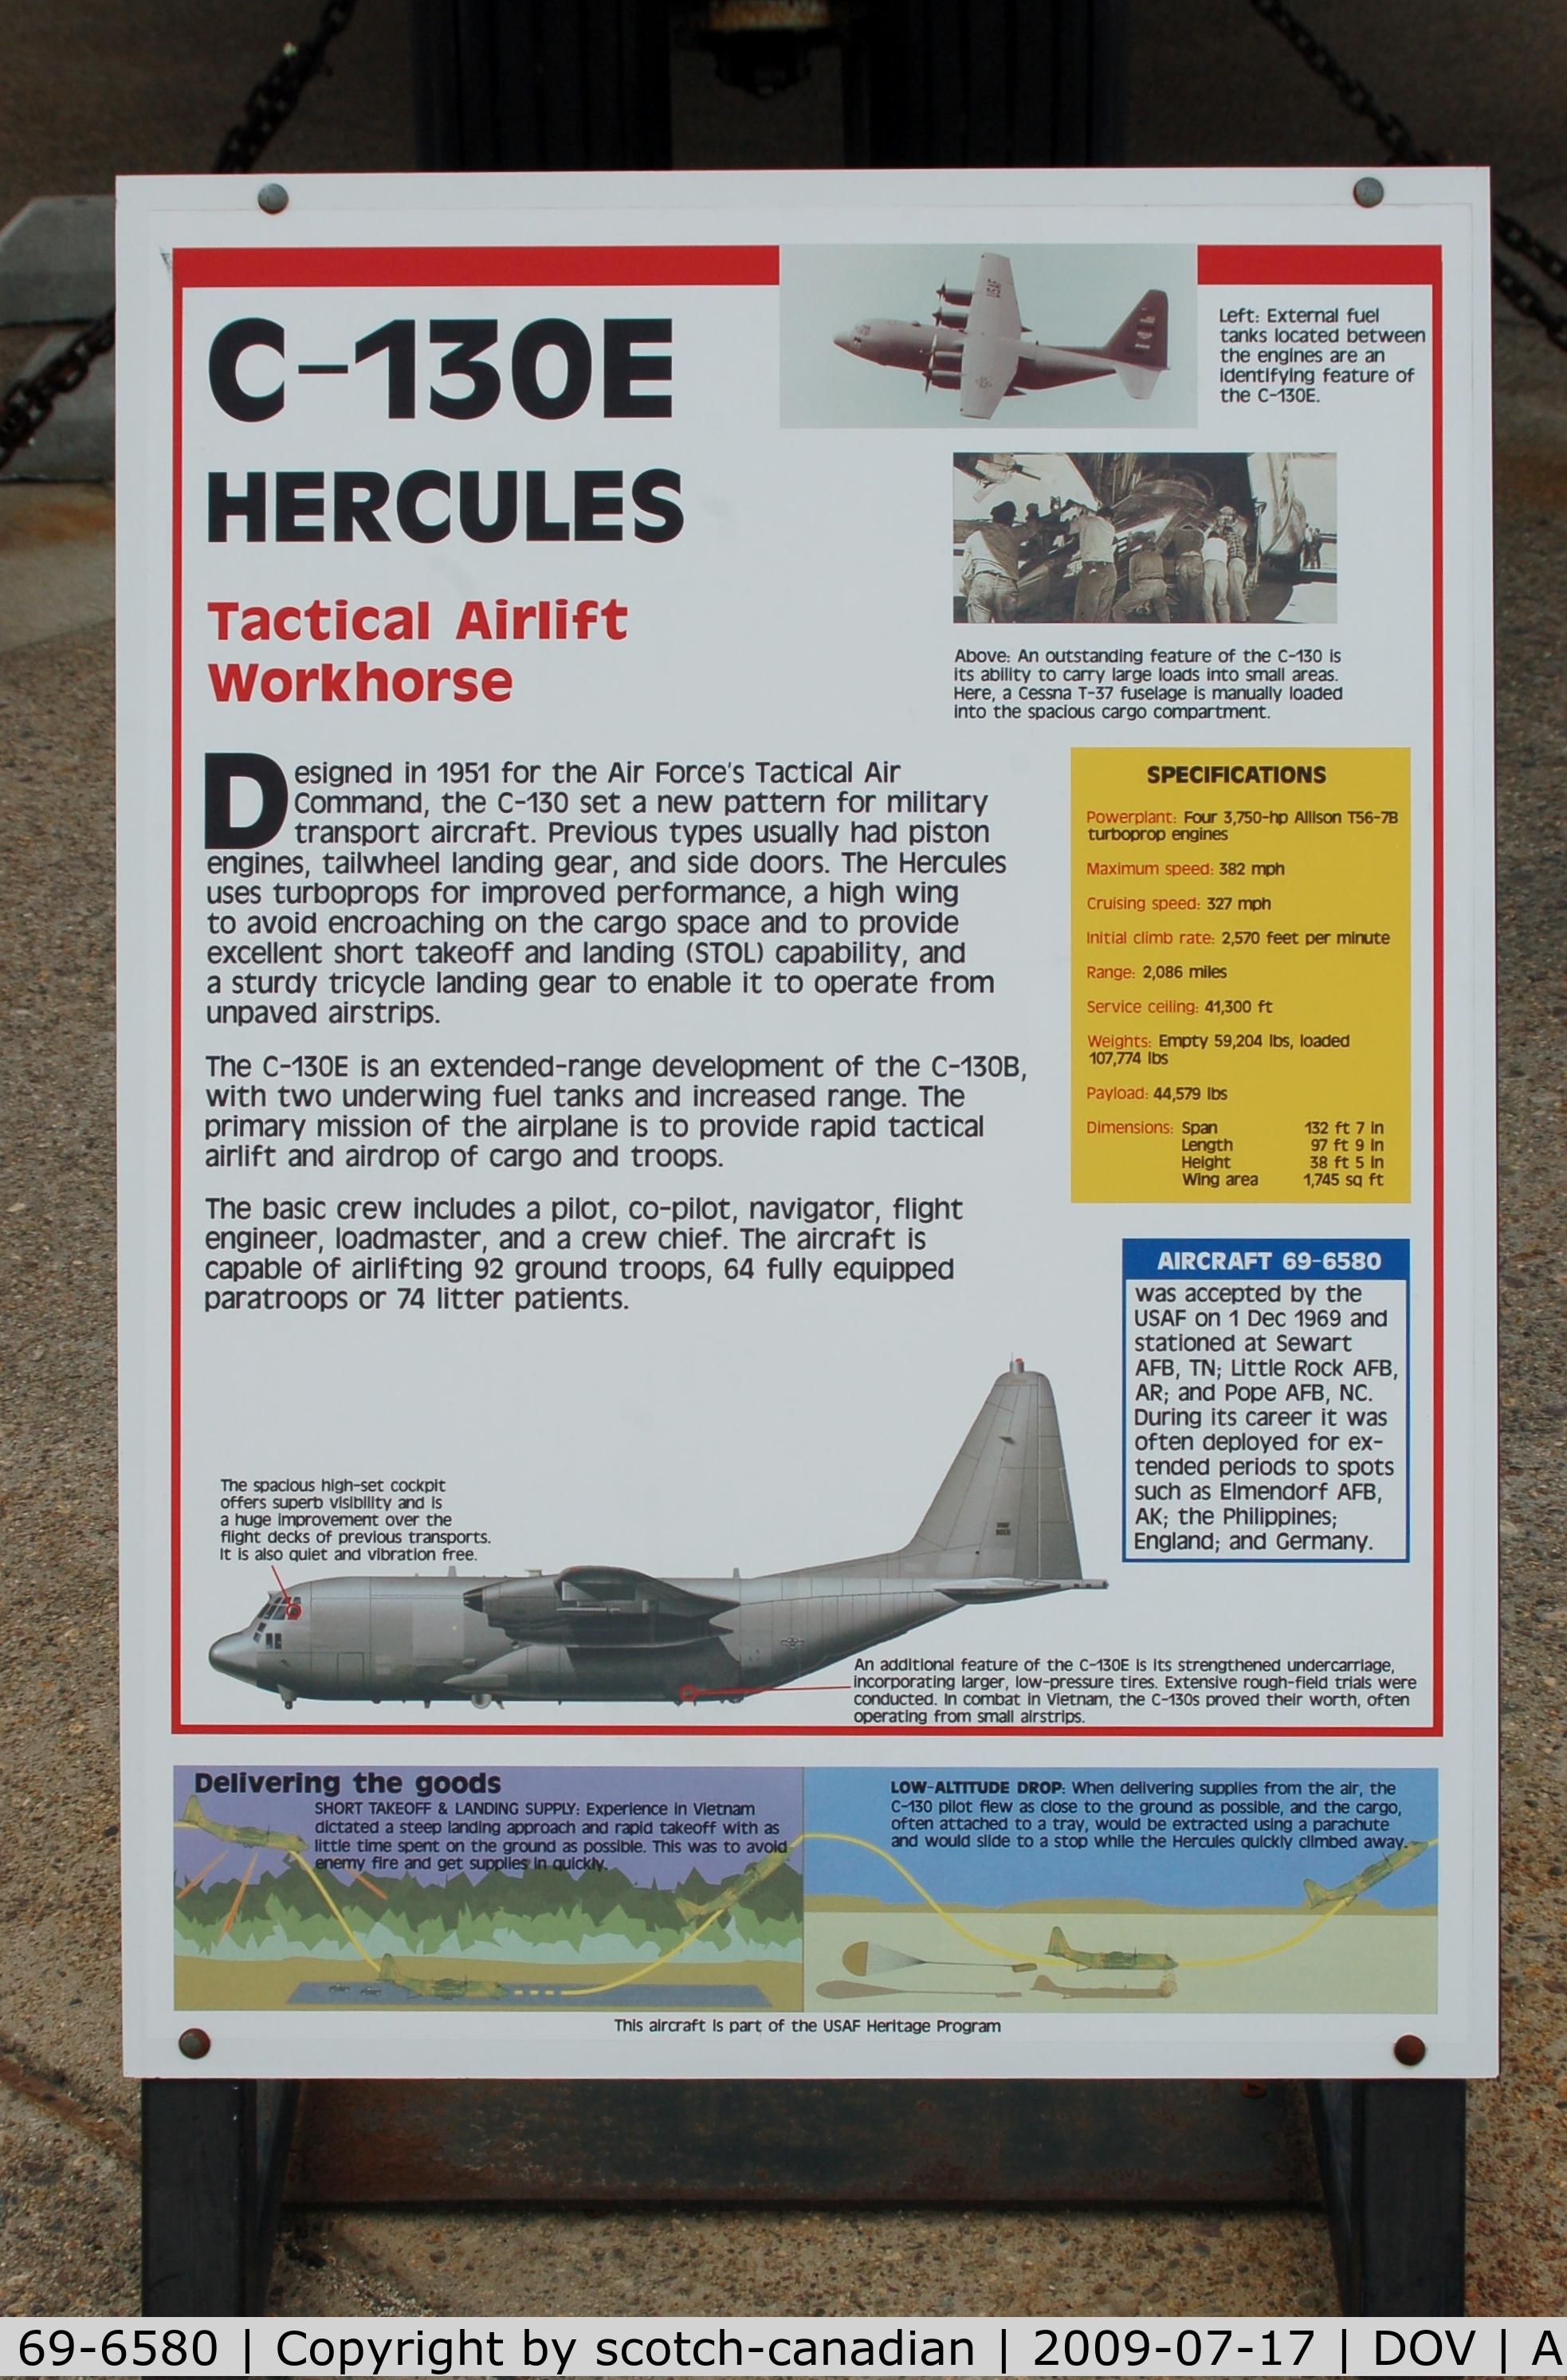 69-6580, 1969 Lockheed C-130E Hercules C/N 382-4356, Information Plaque for the Lockheed C-130E Hercules at the Air Mobility Command Museum, Dover AFB, DE